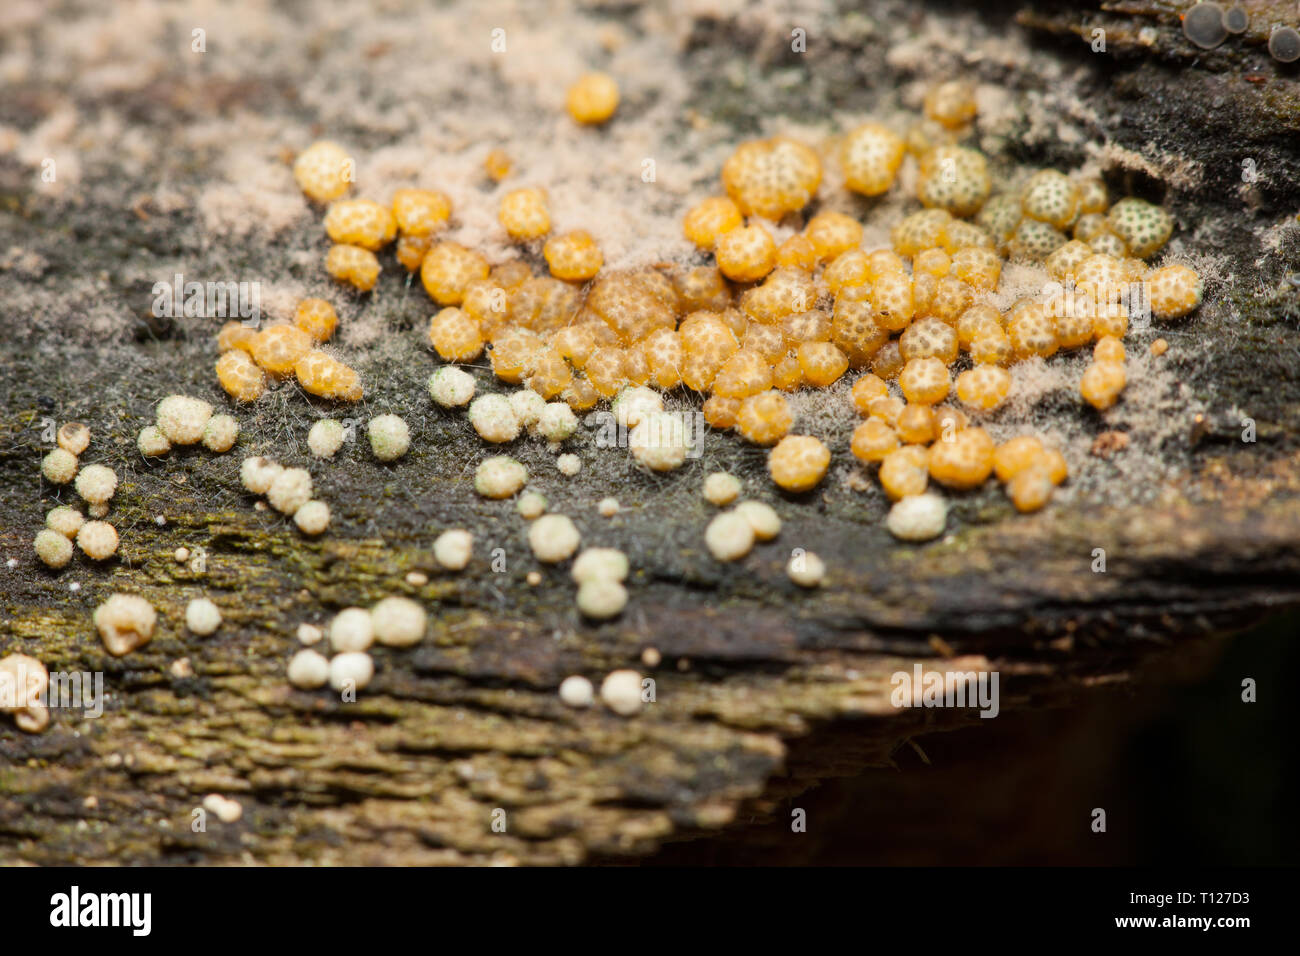 Green spored fungi Stock Photo